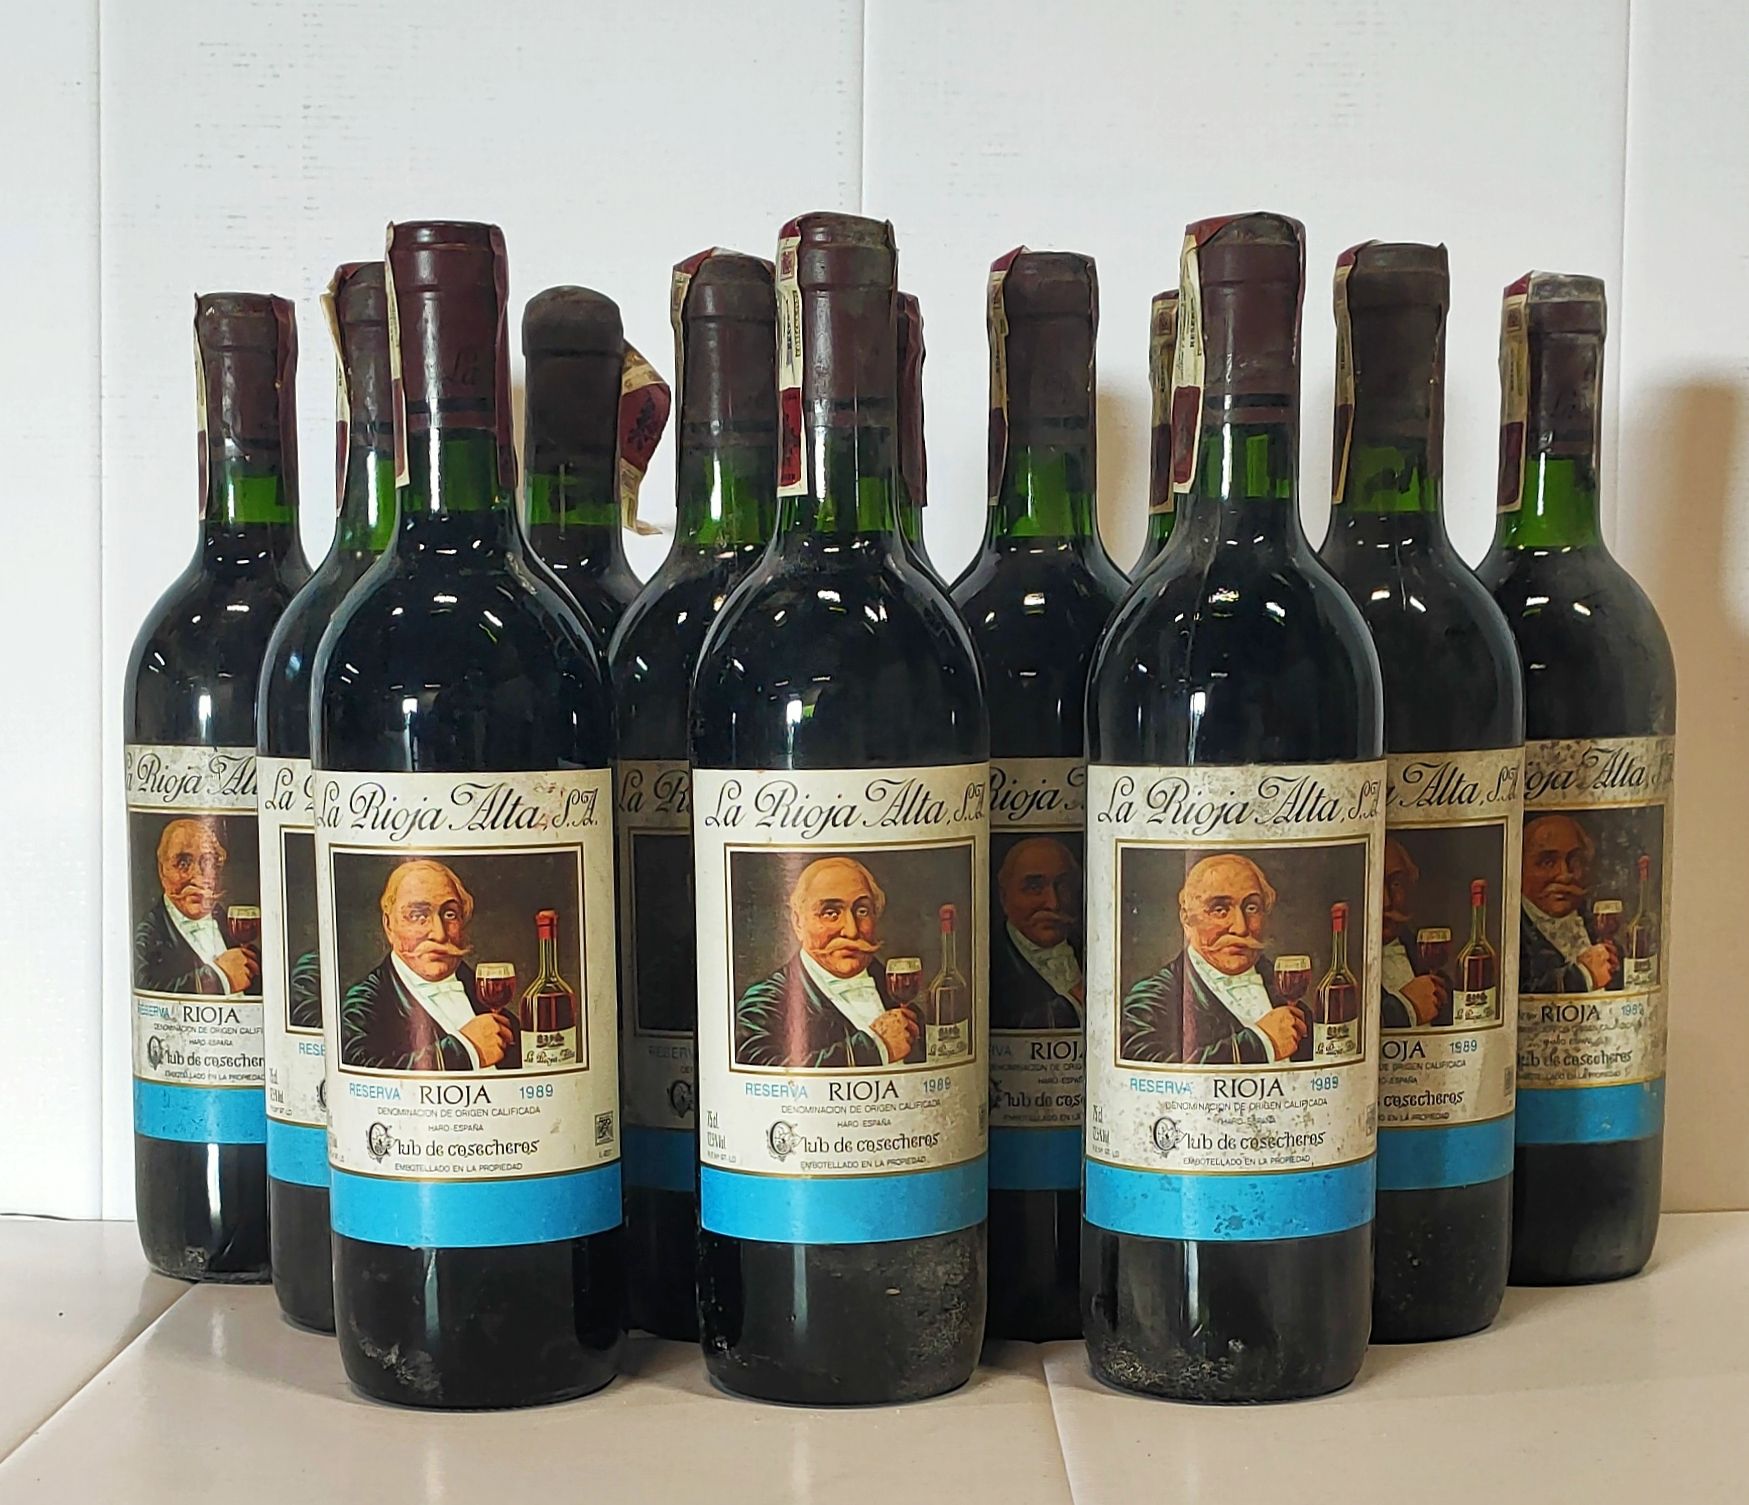 Null 12 botellas

RIOJA Reserva - "La Rioja Alta

1989

Etiquetas manchadas y li&hellip;